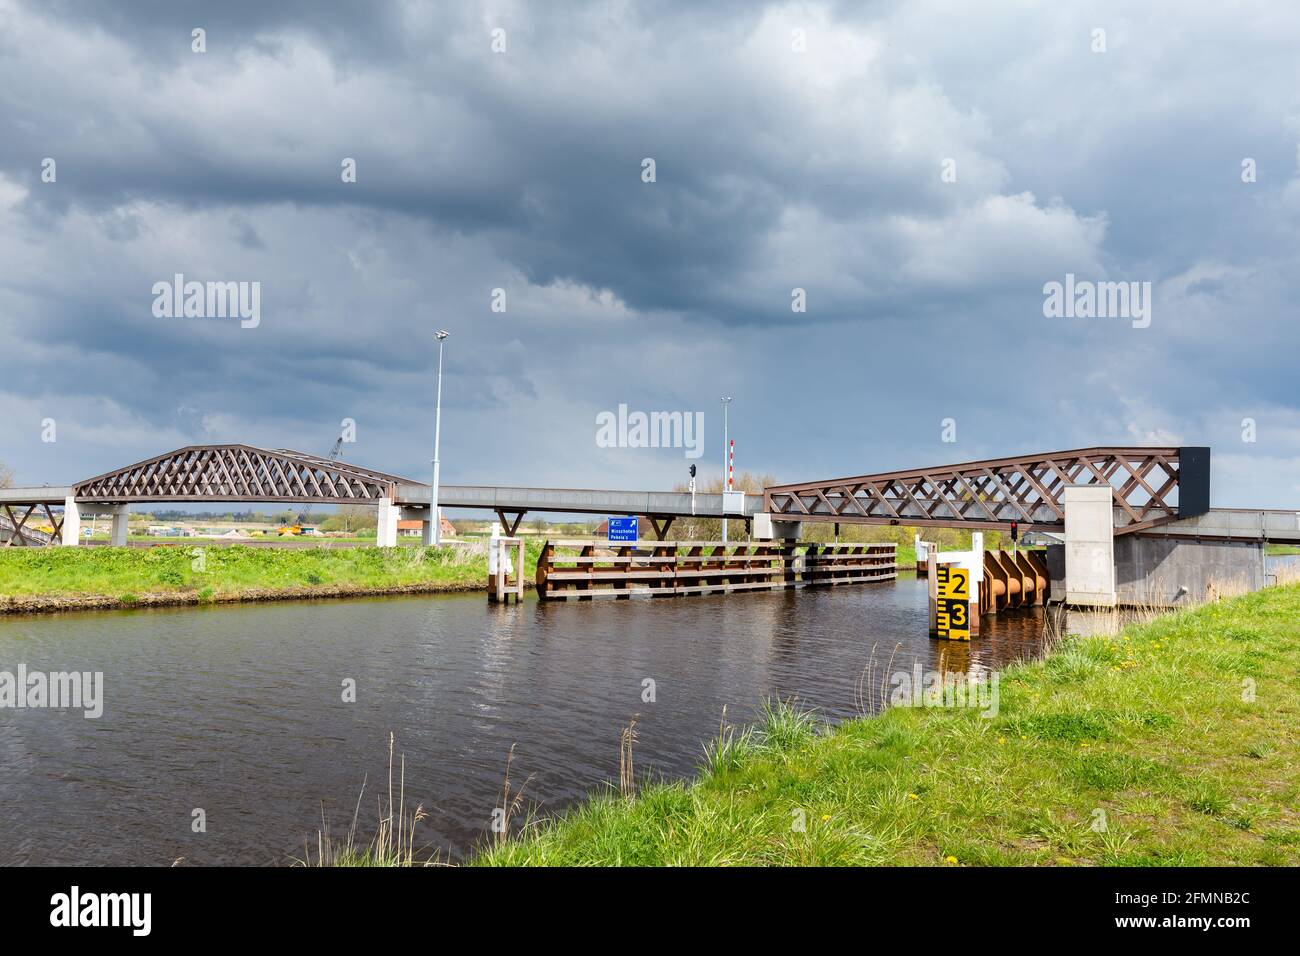 Wooden Bicyle bridge in Groningen The Netherlands Stock Photo